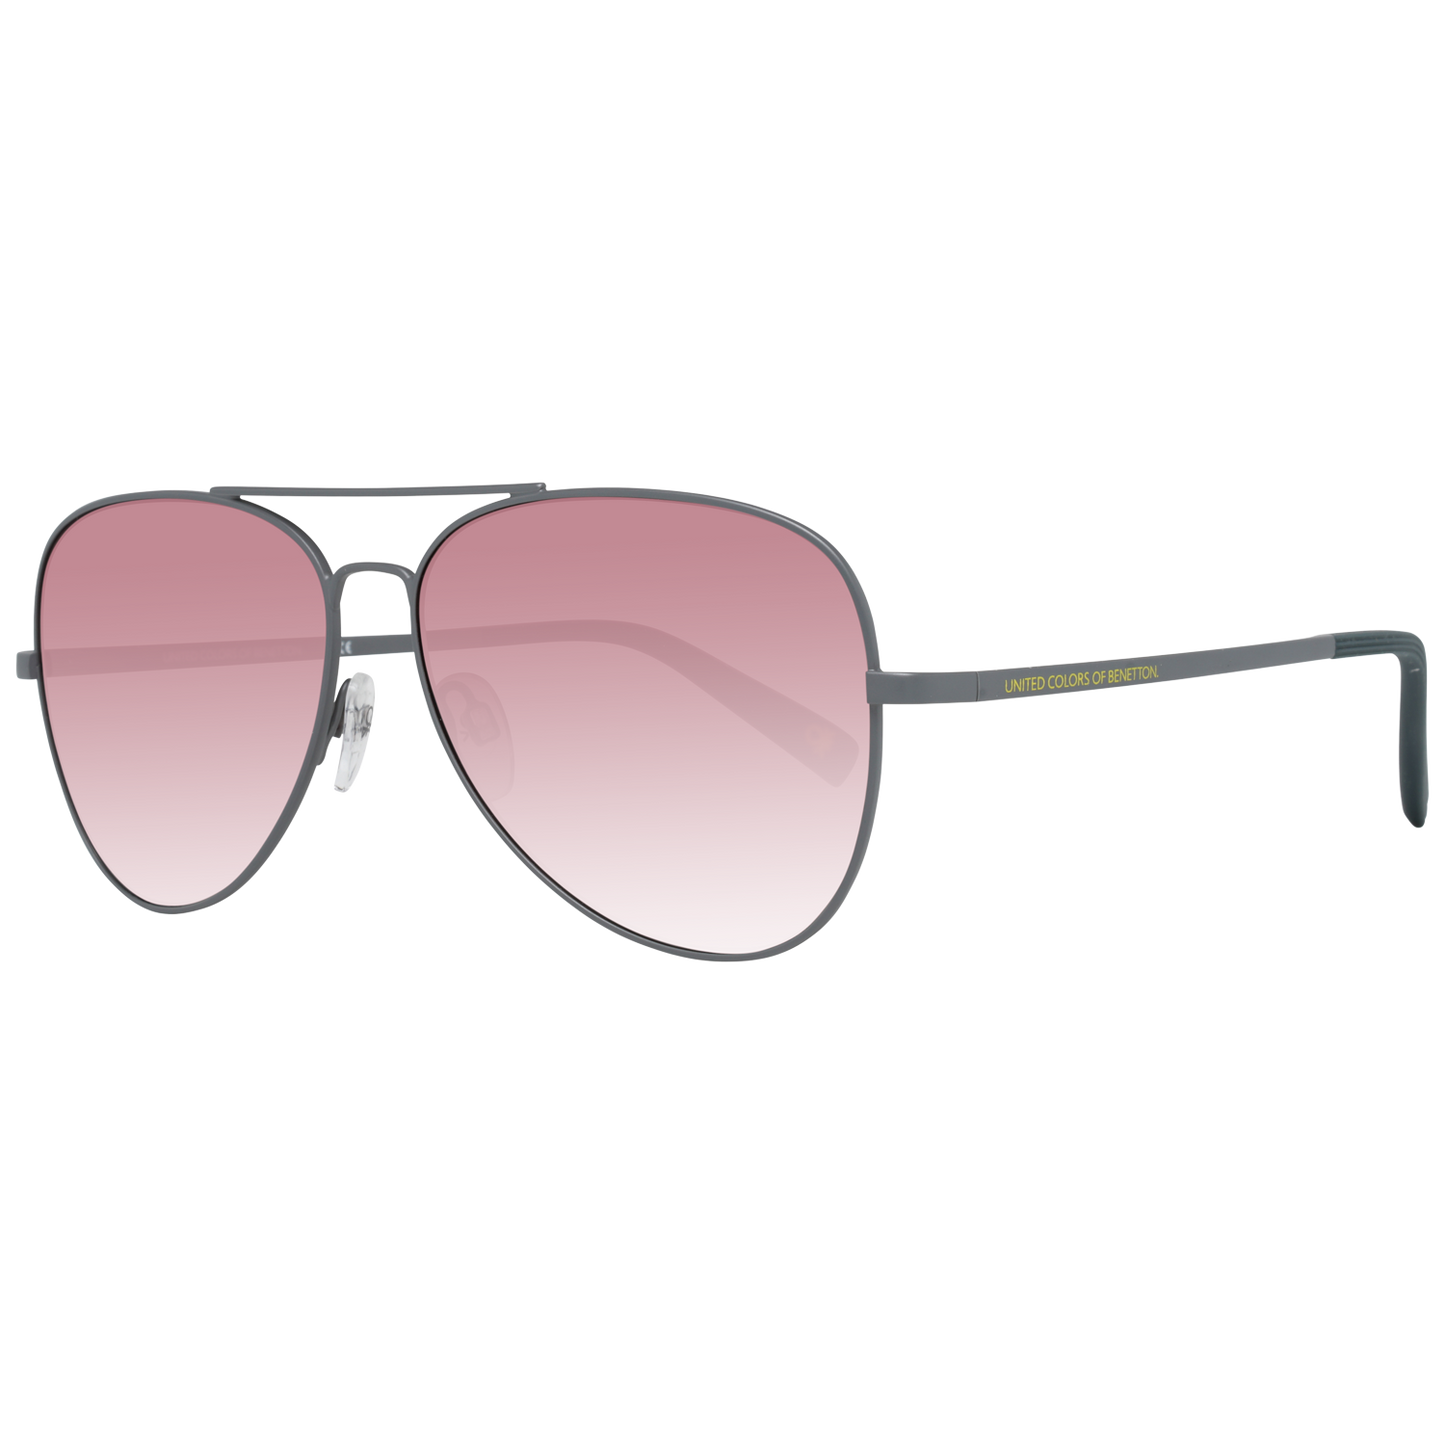 Benetton Sunglasses BE7011 401 59 Matte Grey Women